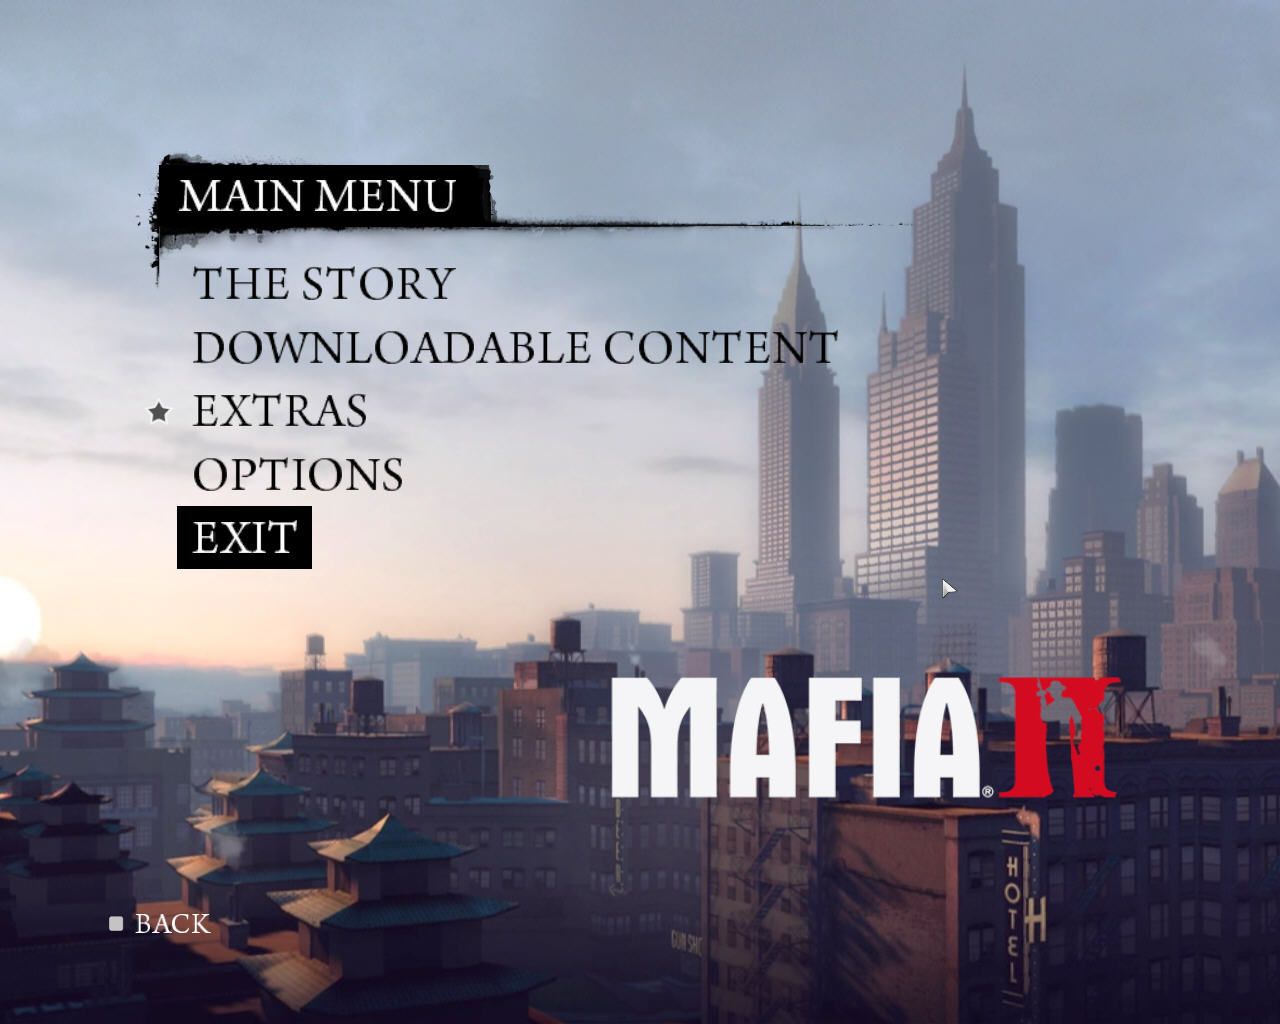 471518-mafia-ii-windows-screenshot-title-screen-main-menu.jpg